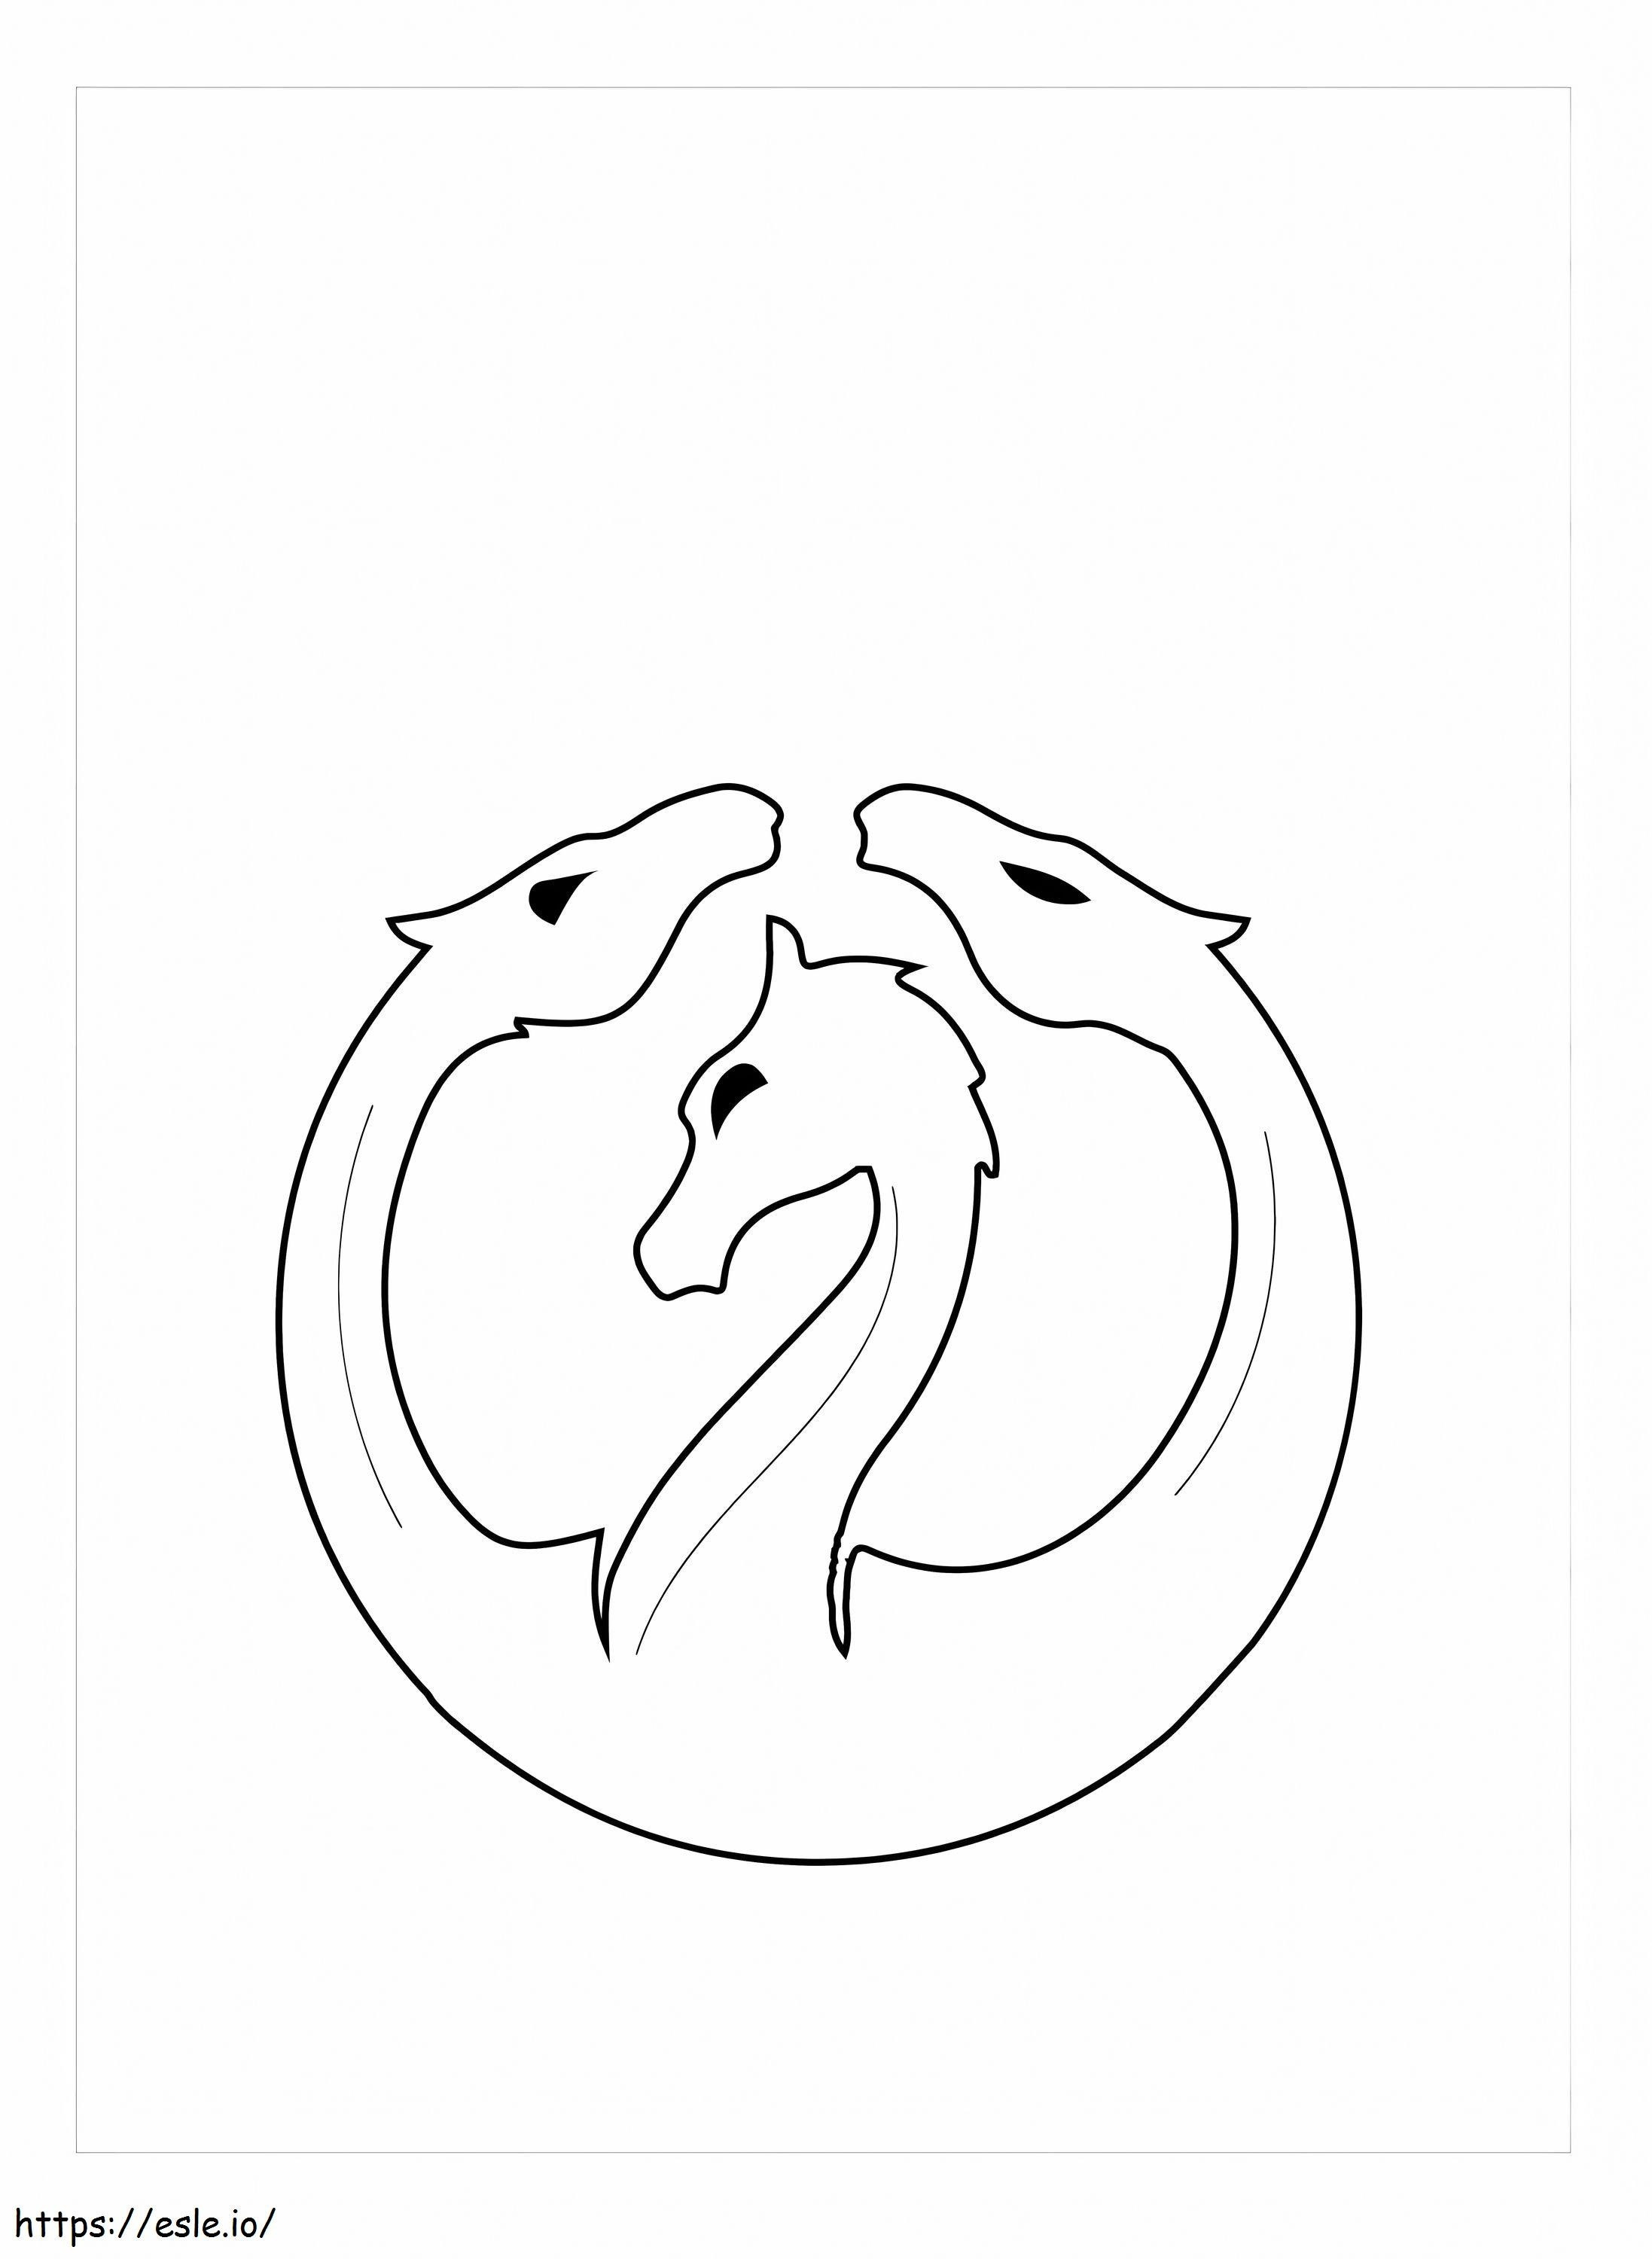 Hydra logosu boyama